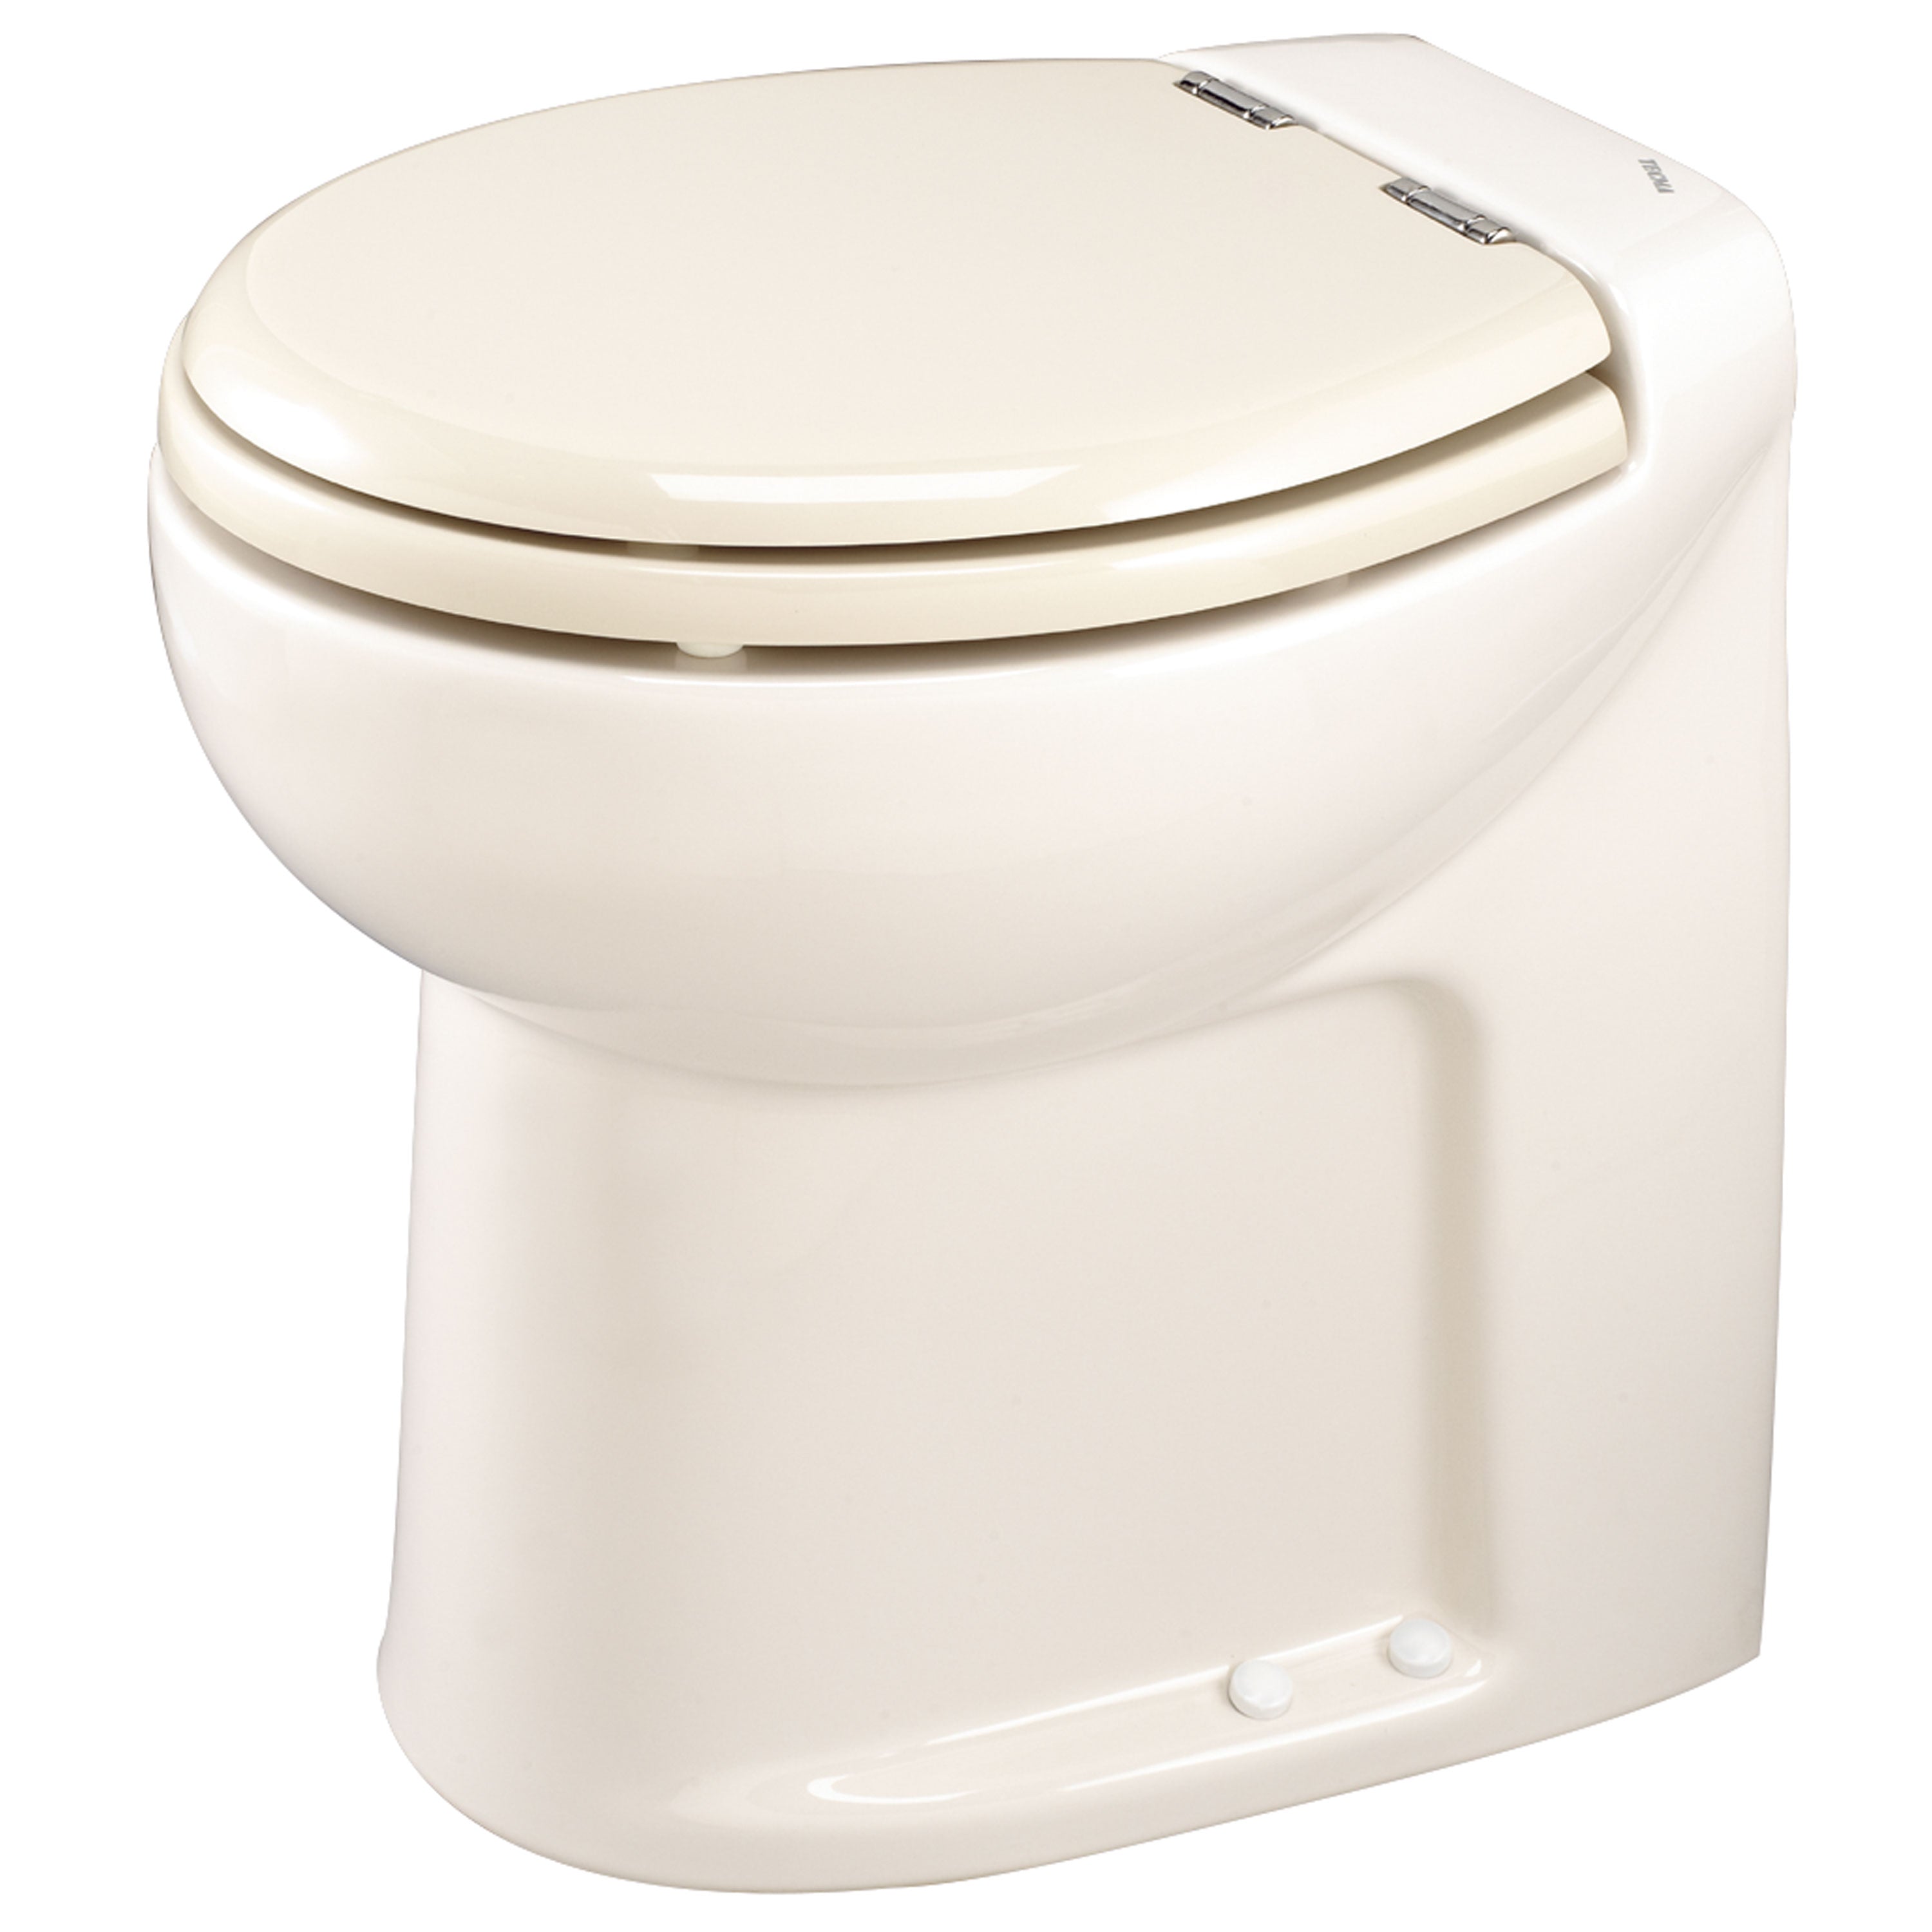 Thetford 38118 Tecma Silence 2 Mode, 12V Toilet with Water Pump - High Profile, Bone